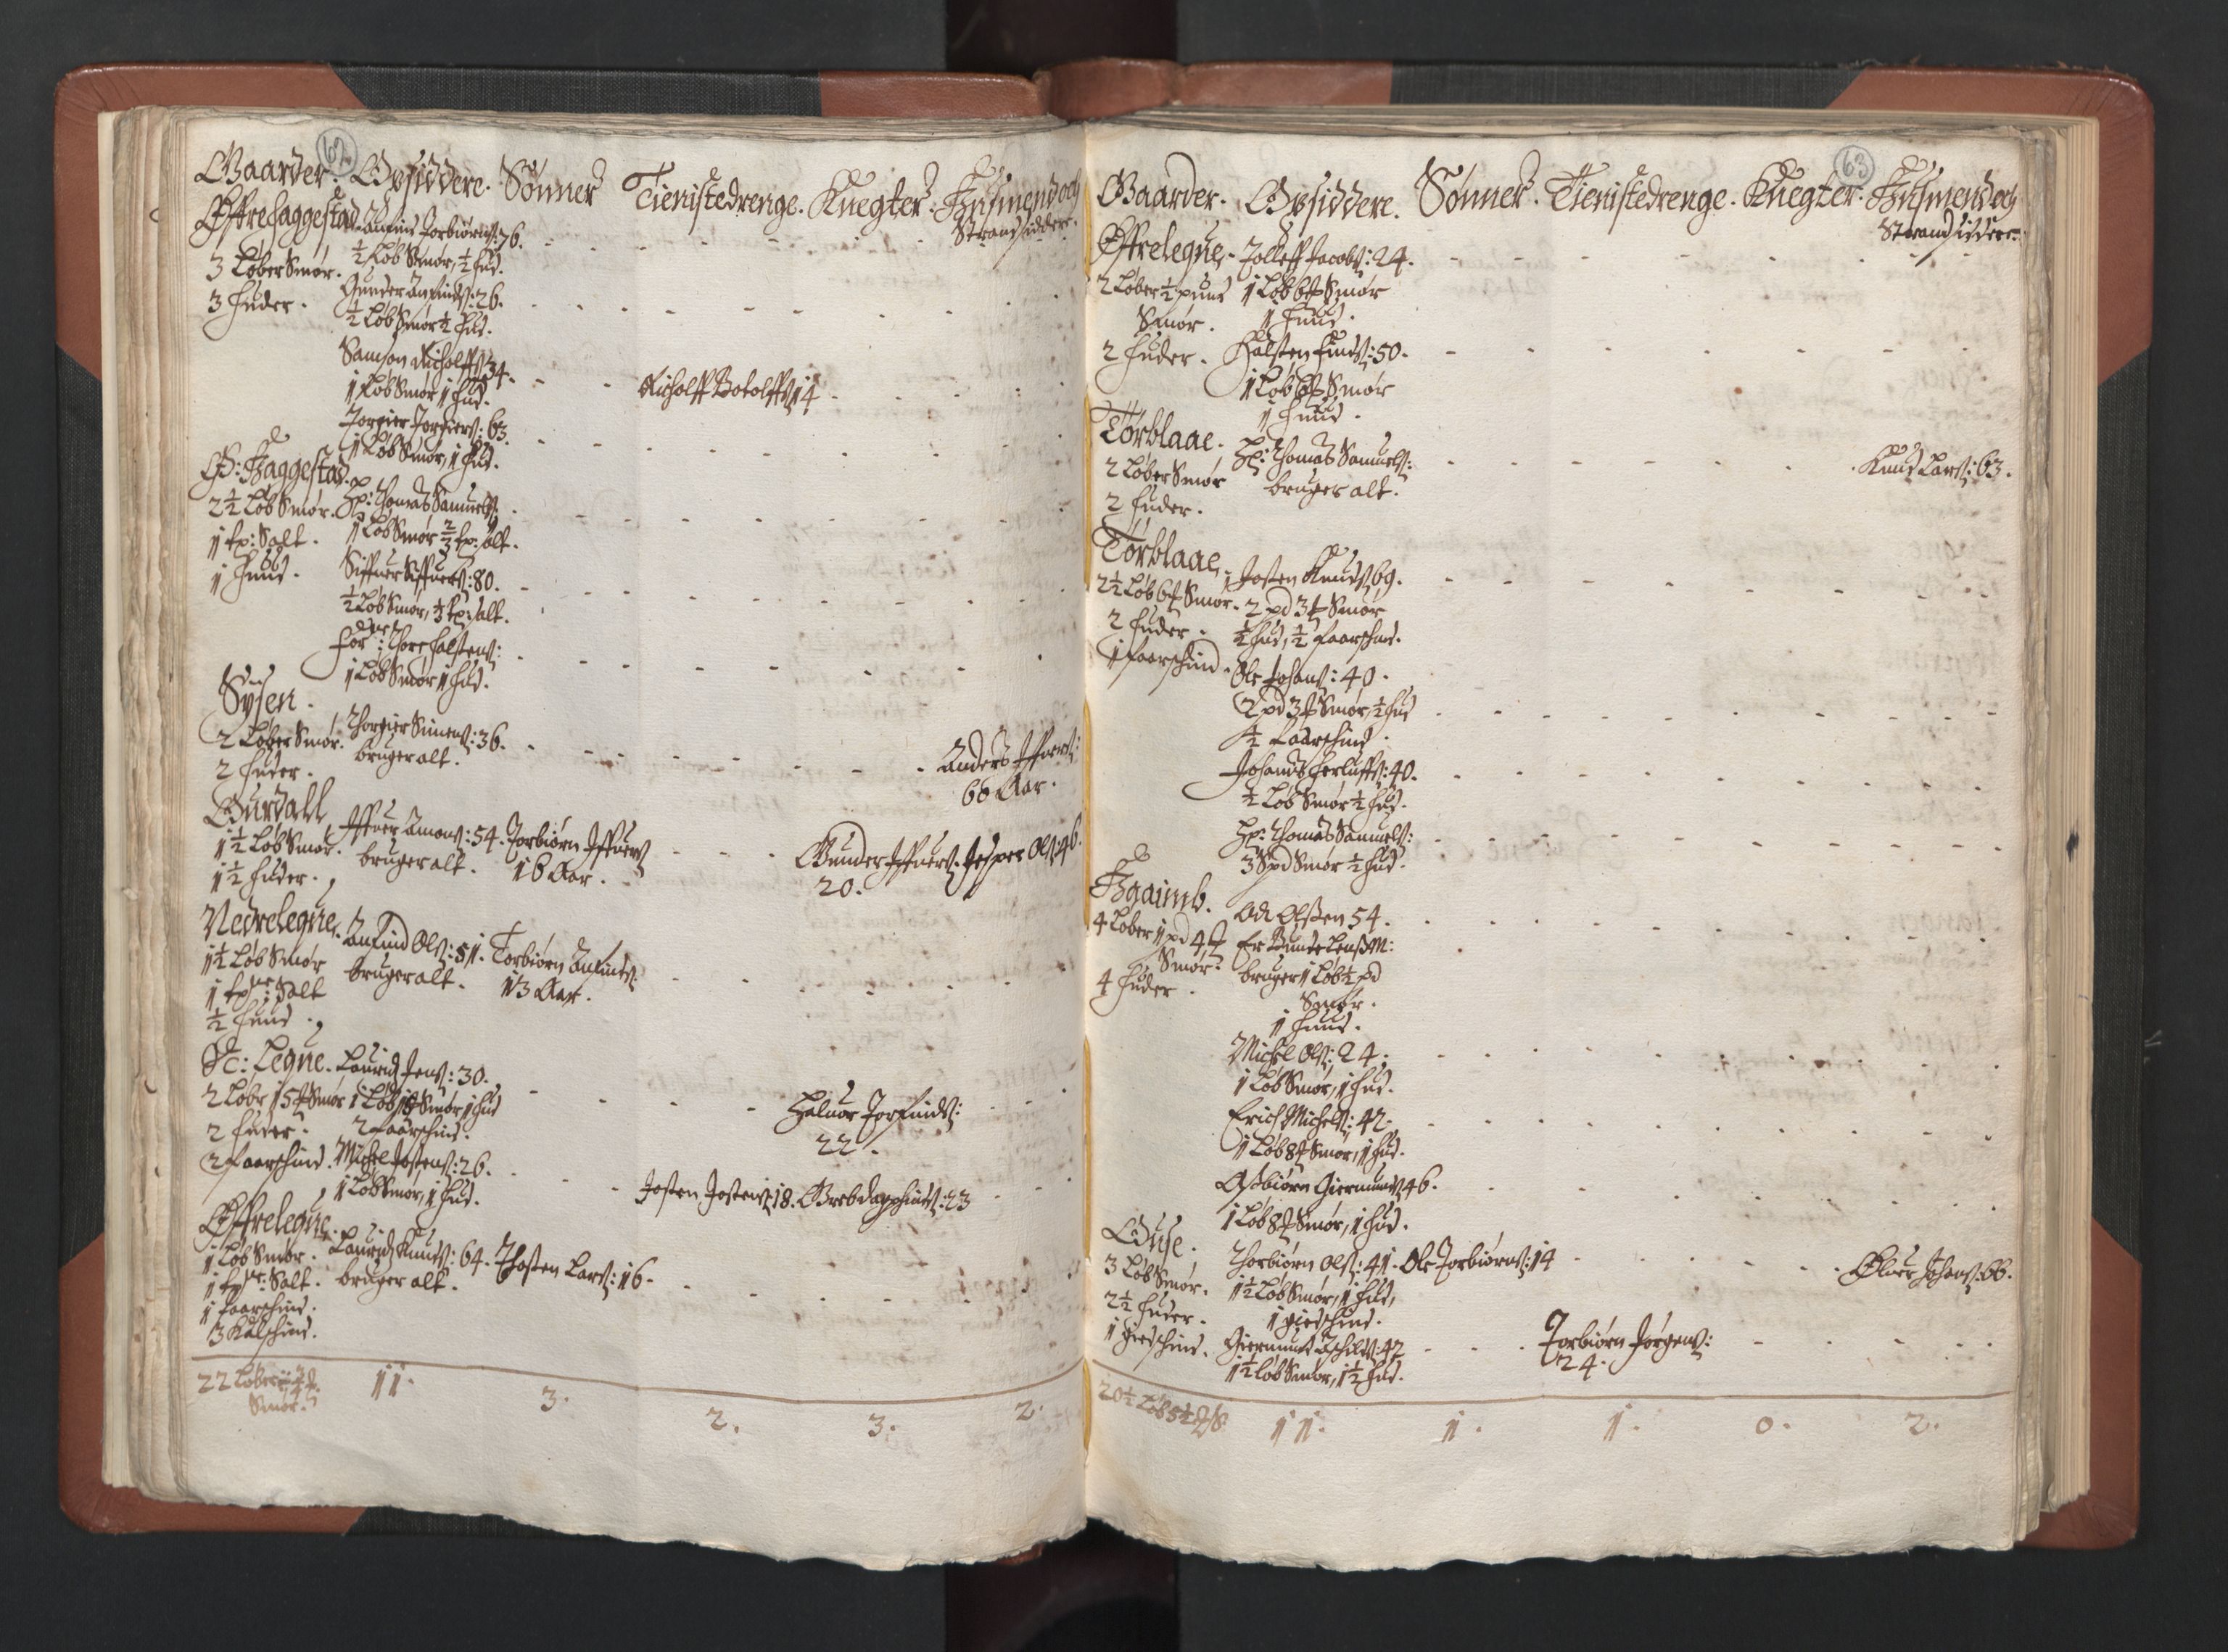 RA, Fogdenes og sorenskrivernes manntall 1664-1666, nr. 14: Hardanger len, Ytre Sogn fogderi og Indre Sogn fogderi, 1664-1665, s. 62-63